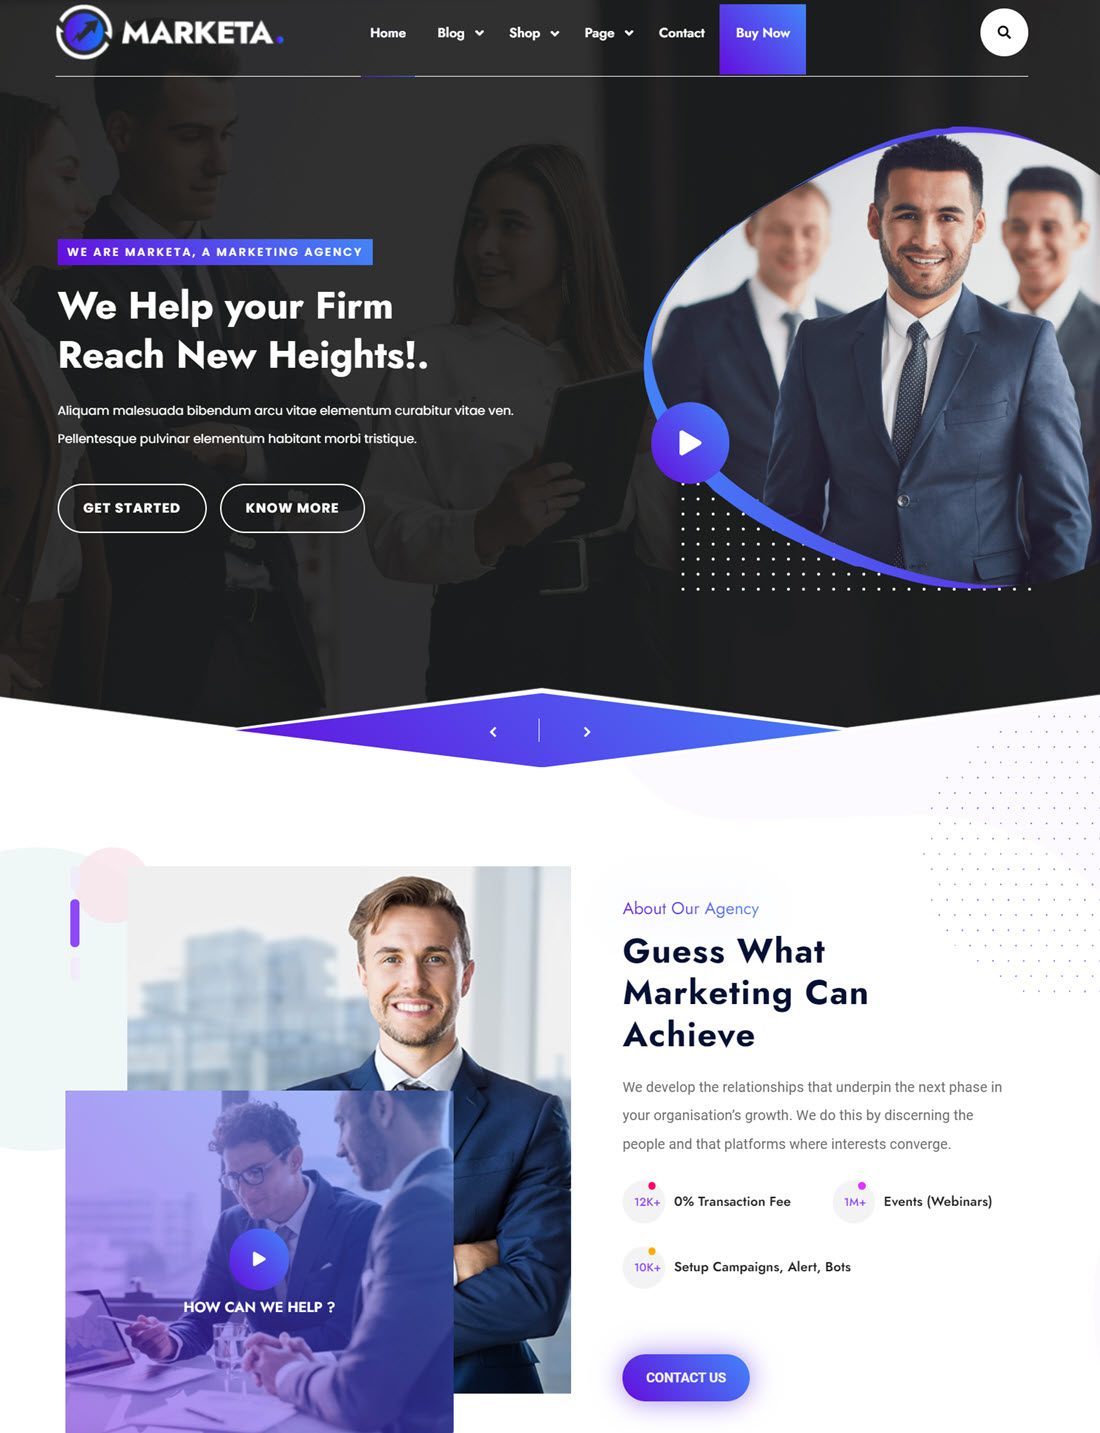 Marketing Agency We Help Your FirmReach New Heights